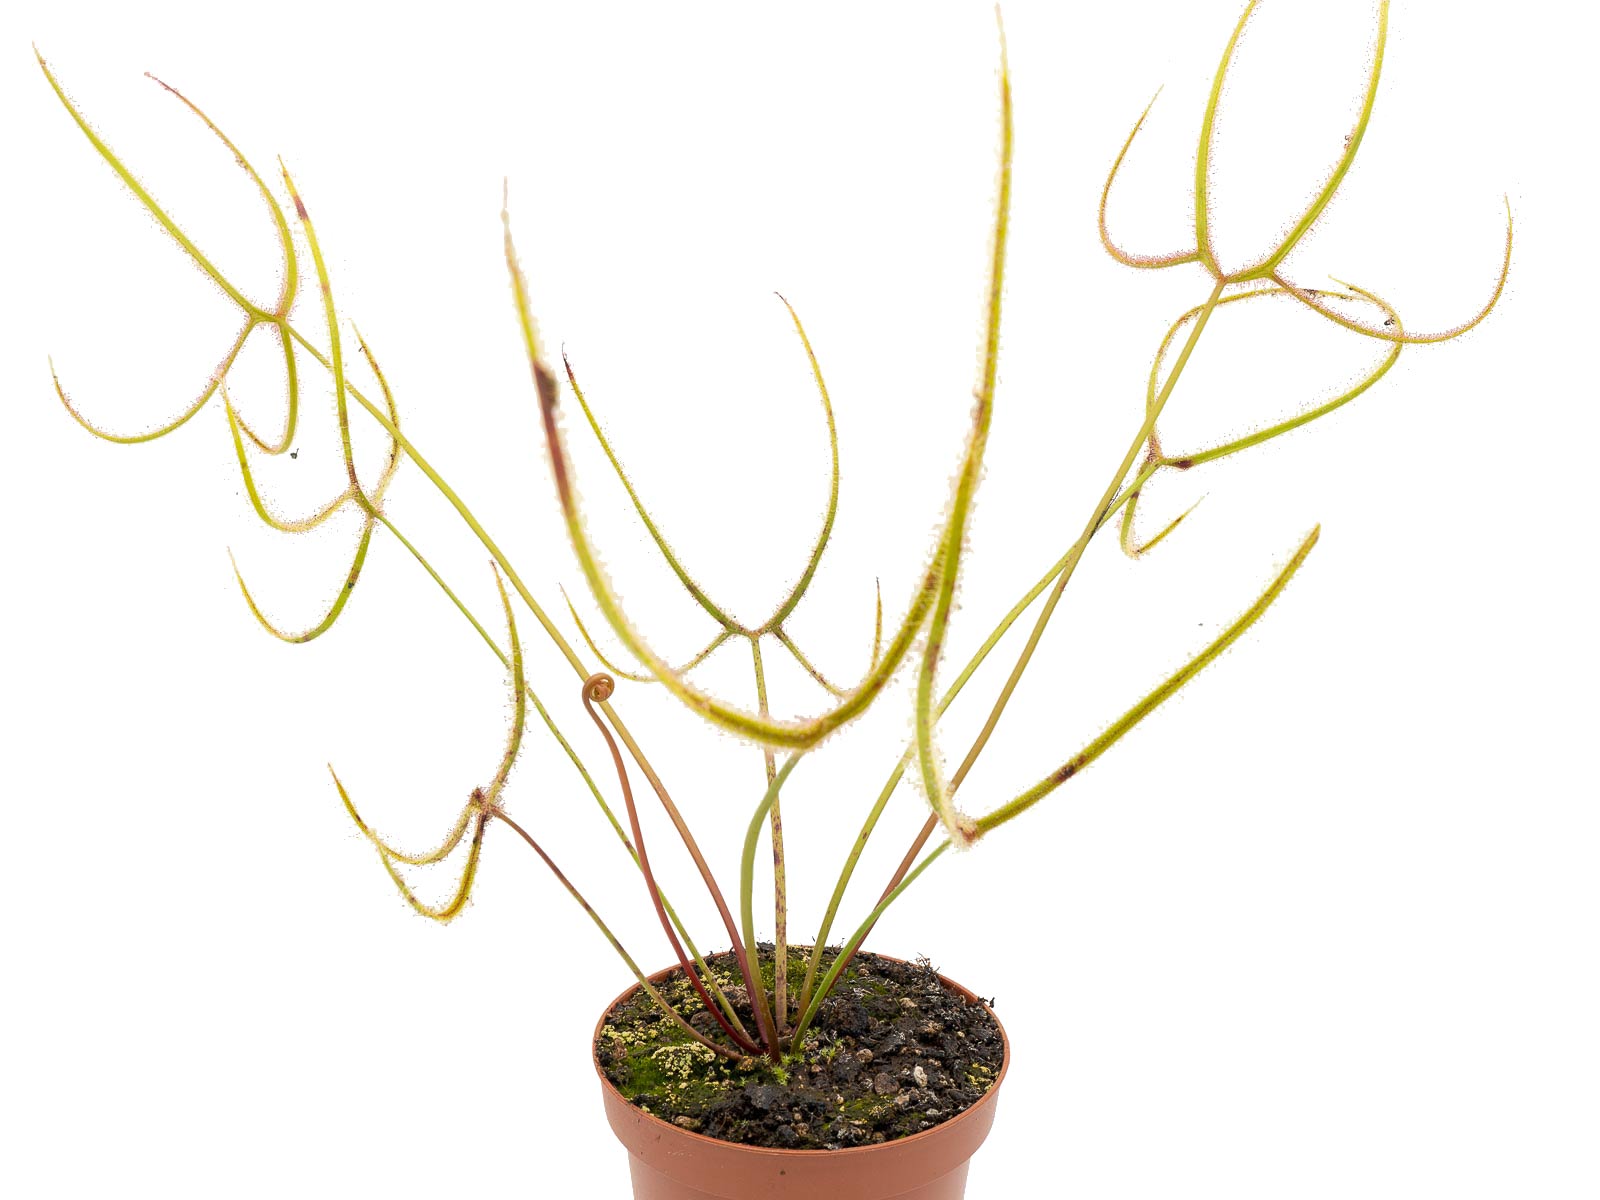 Drosera binata var. dichotoma - Giant form, 70cm tall